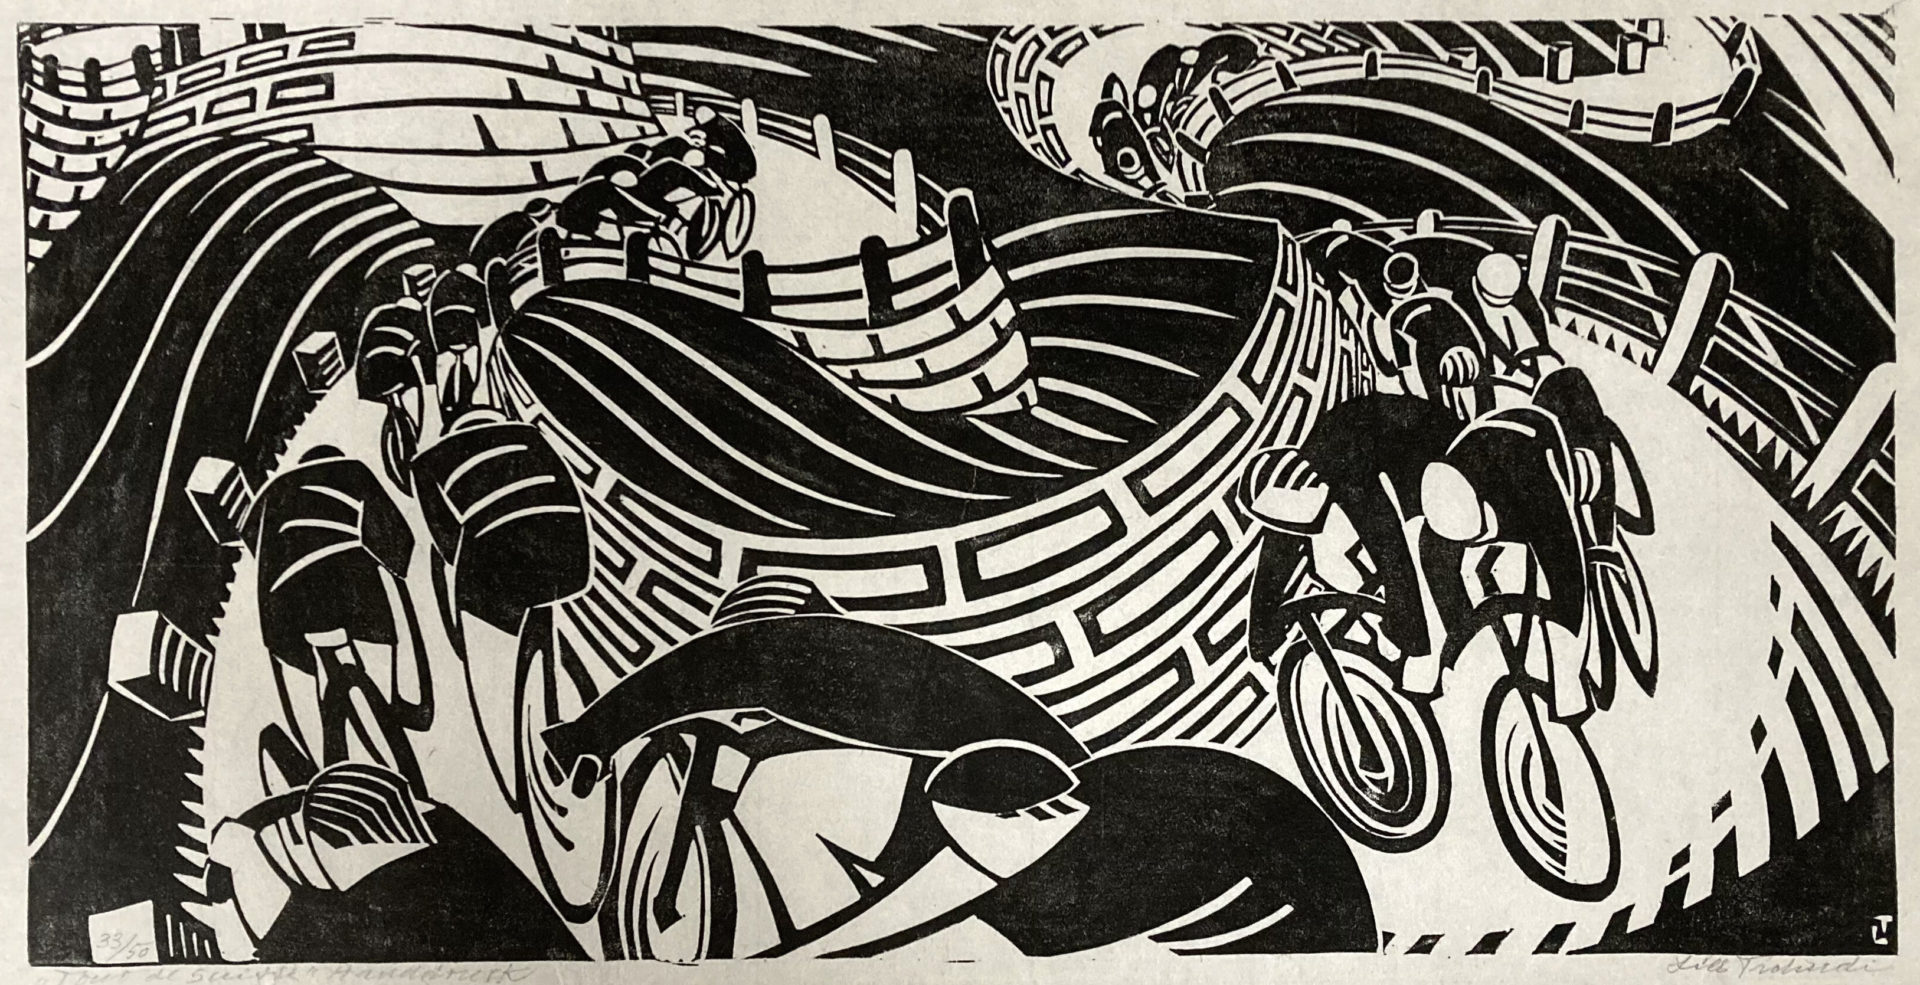 Lill Tschudi Tour de Suisse, 1935 Linocut on Japon paper Image Dimensions: 9 7/8 x 19 5/8 inches (25.1 x 49.8 cm) Paper Dimensions: 12 1/4 x 22 1/2 inches (31.1 x 57.2 cm) Edition of 50